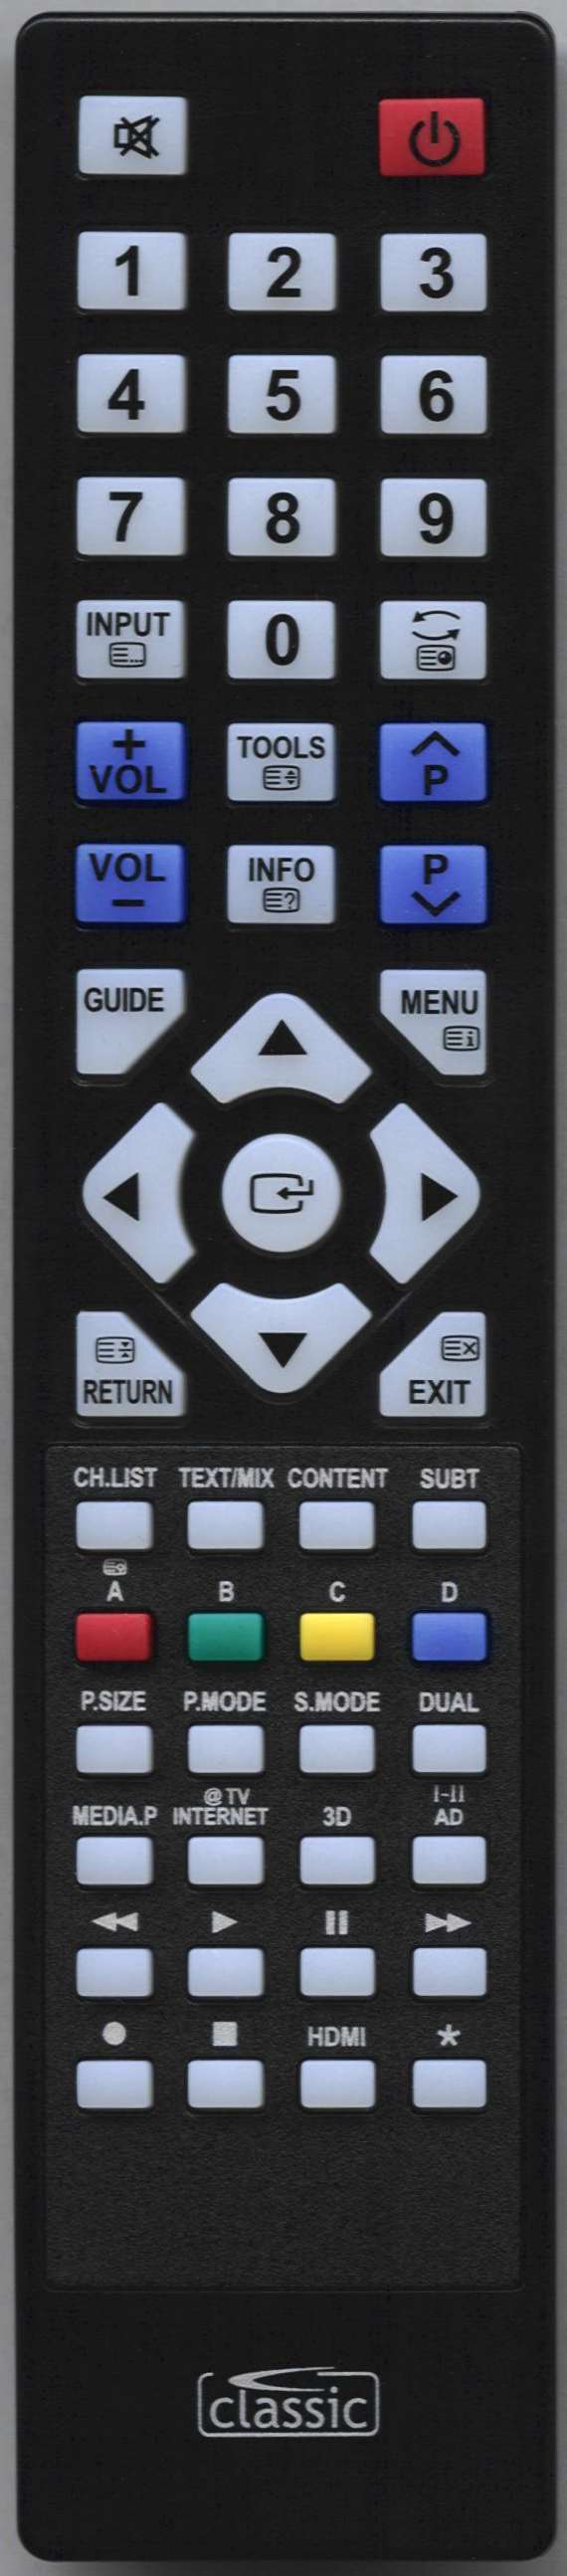 SAMSUNG PS50C450B1WXXH Remote Control